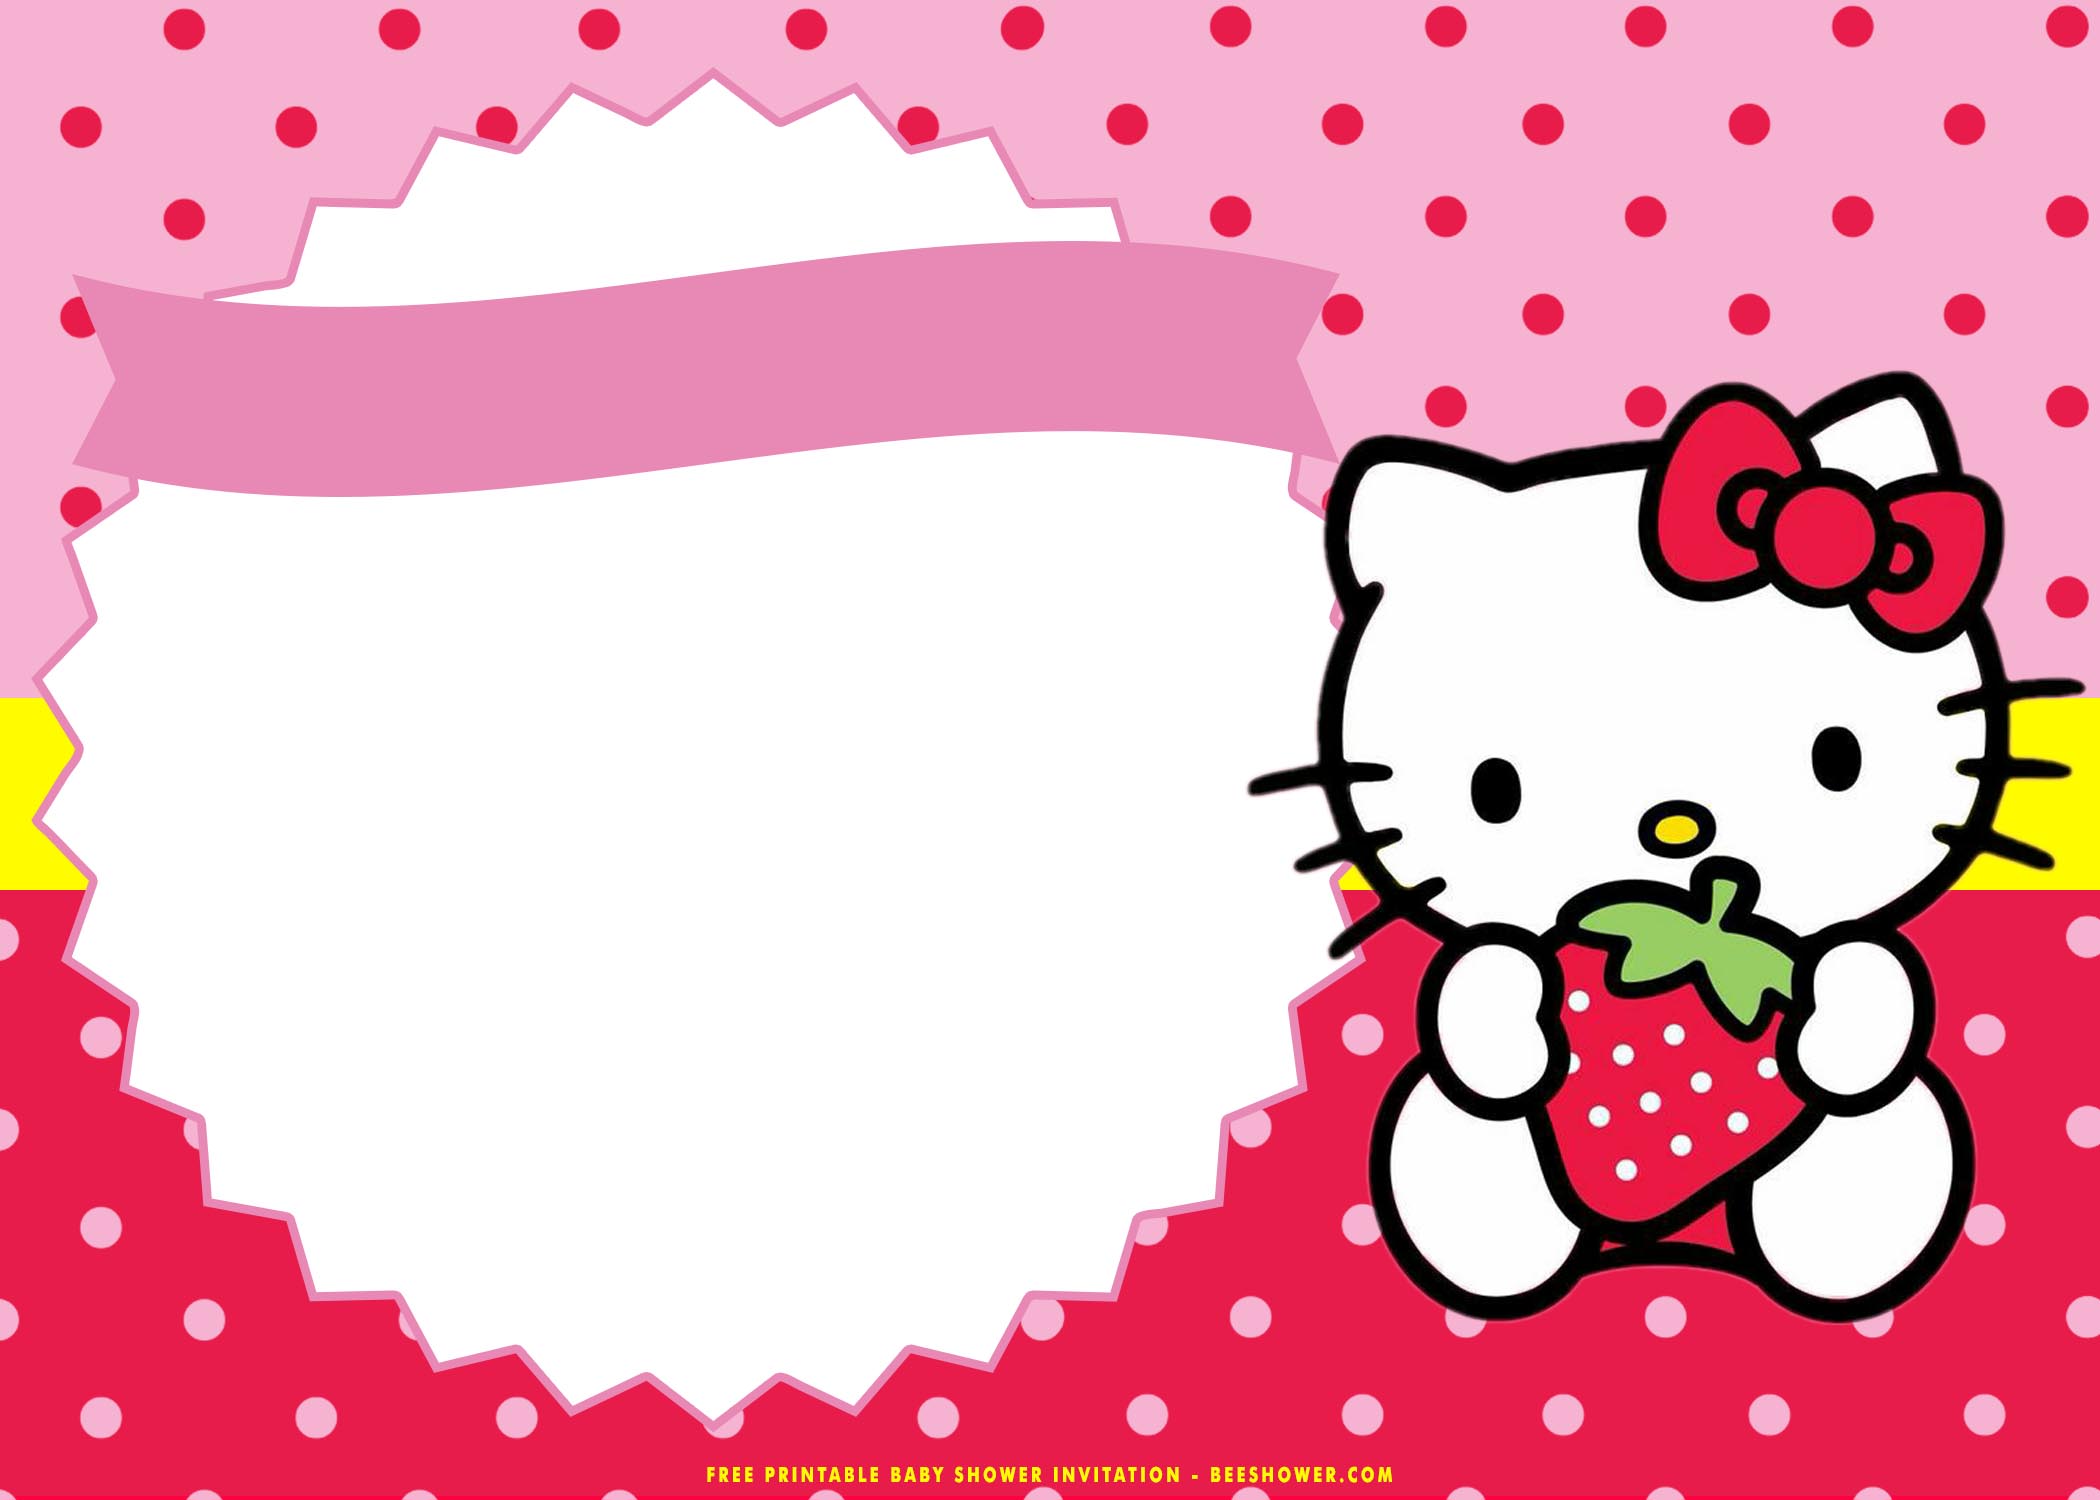  FREE Printable Cute Hello Kitty Baby Shower Invitation Templates FREE Printable Baby